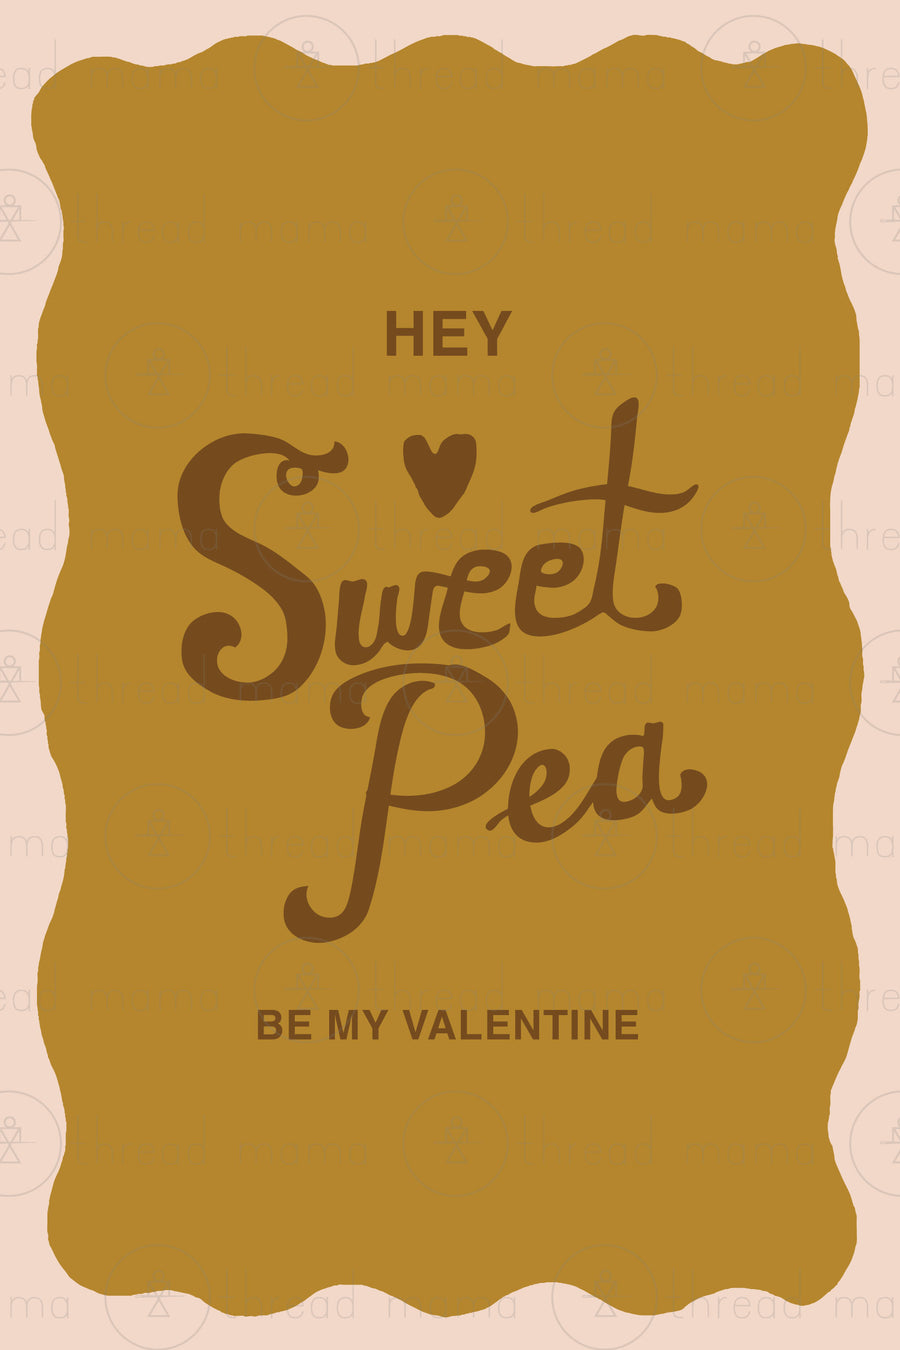 Hey Sweet Pea Be My Valentine